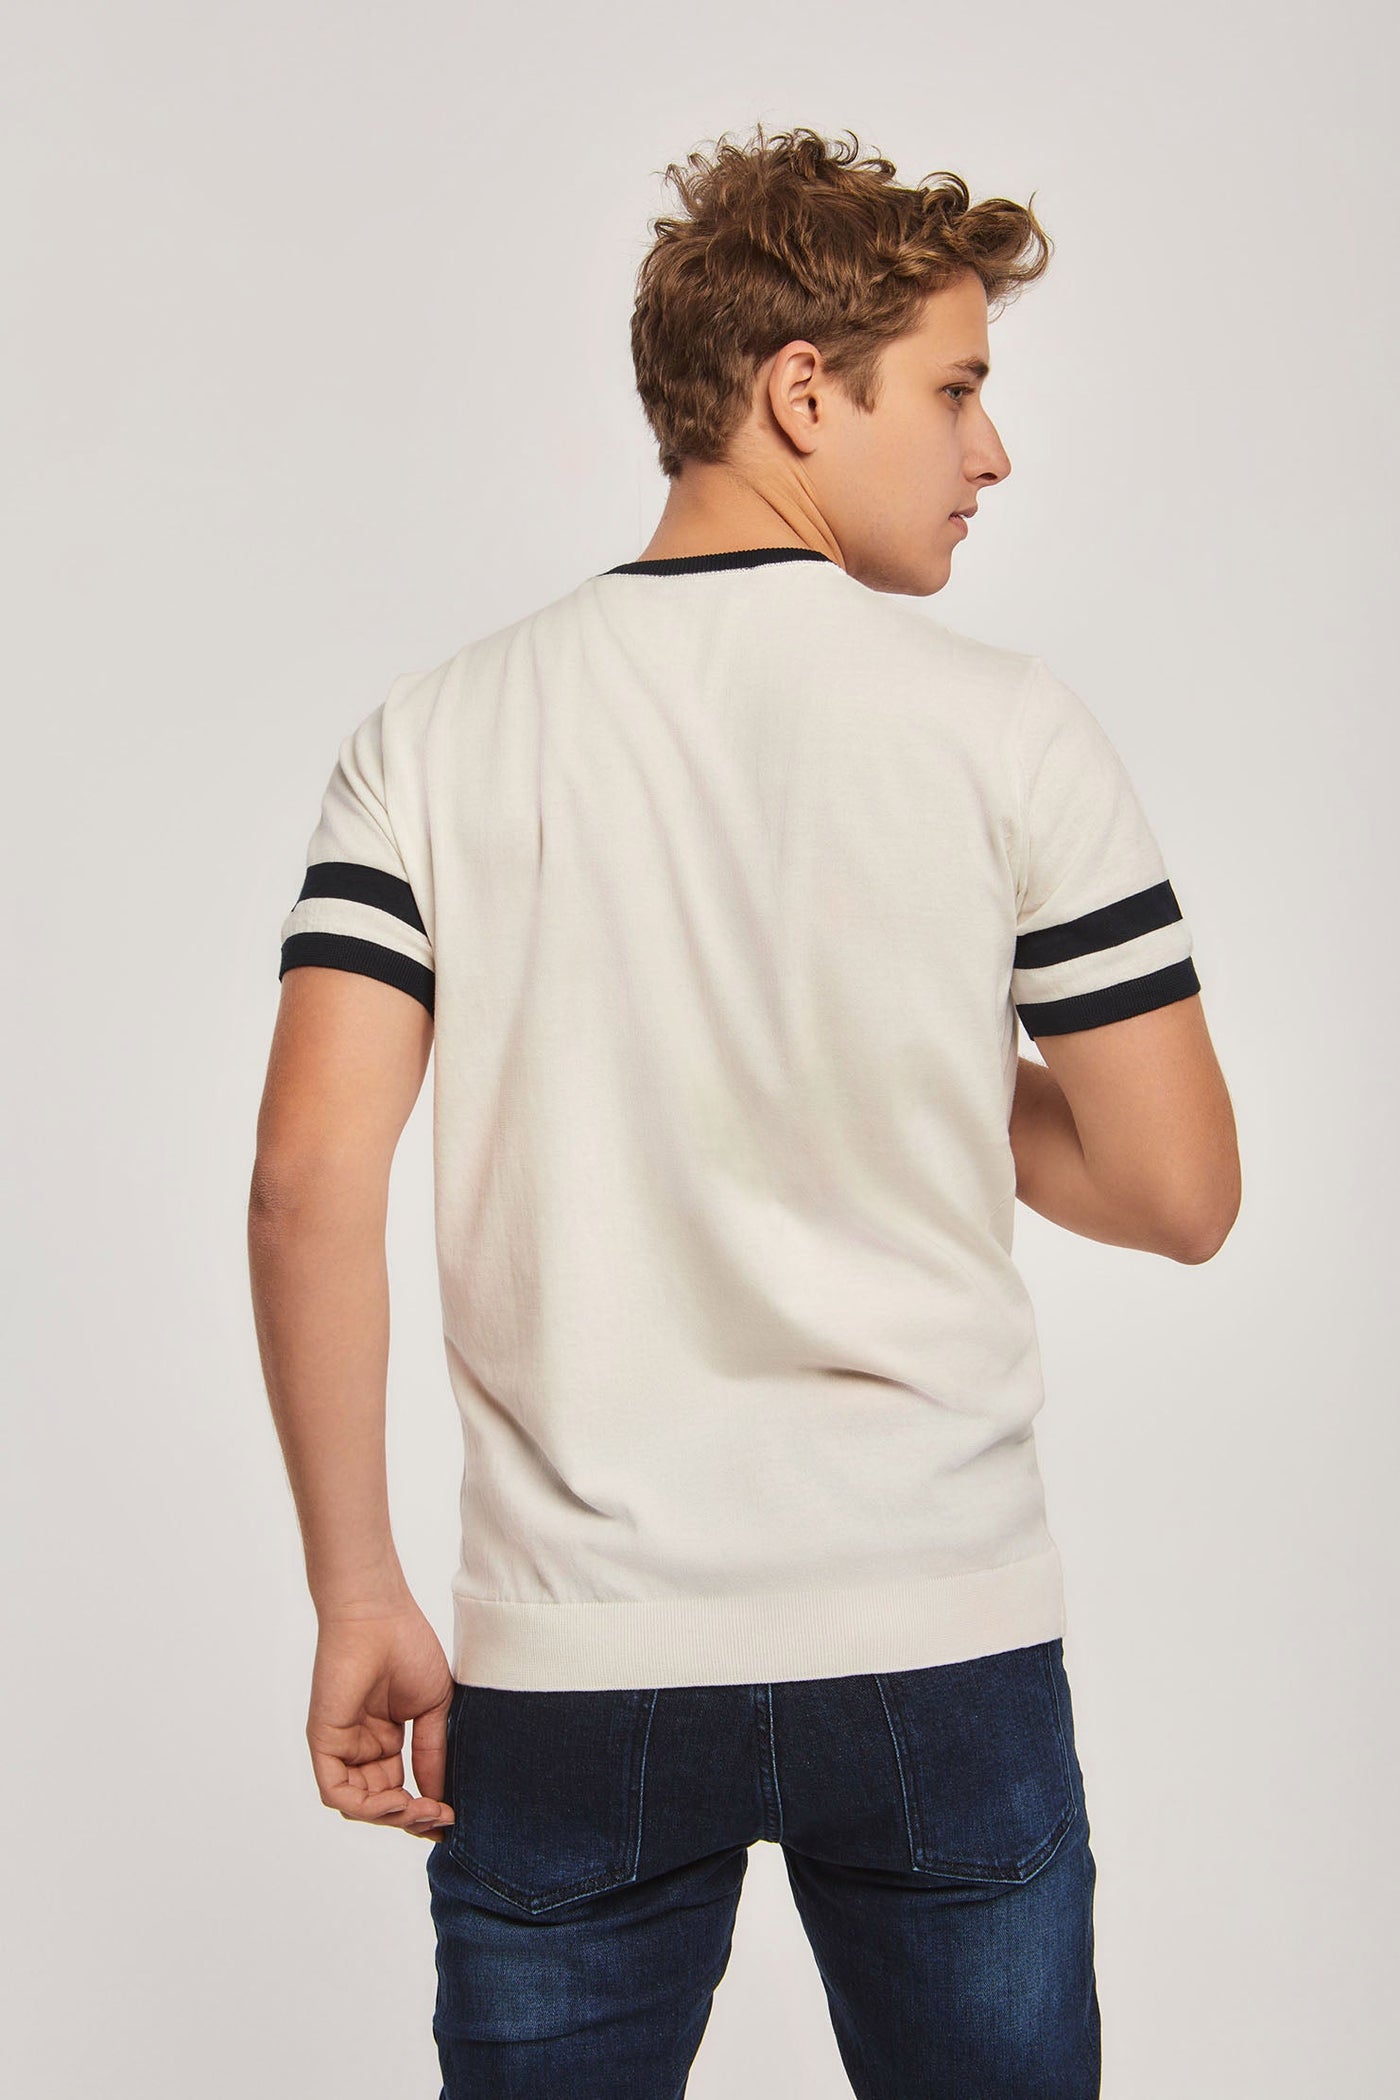 T-Shirt - Half Sleeve - Comfy